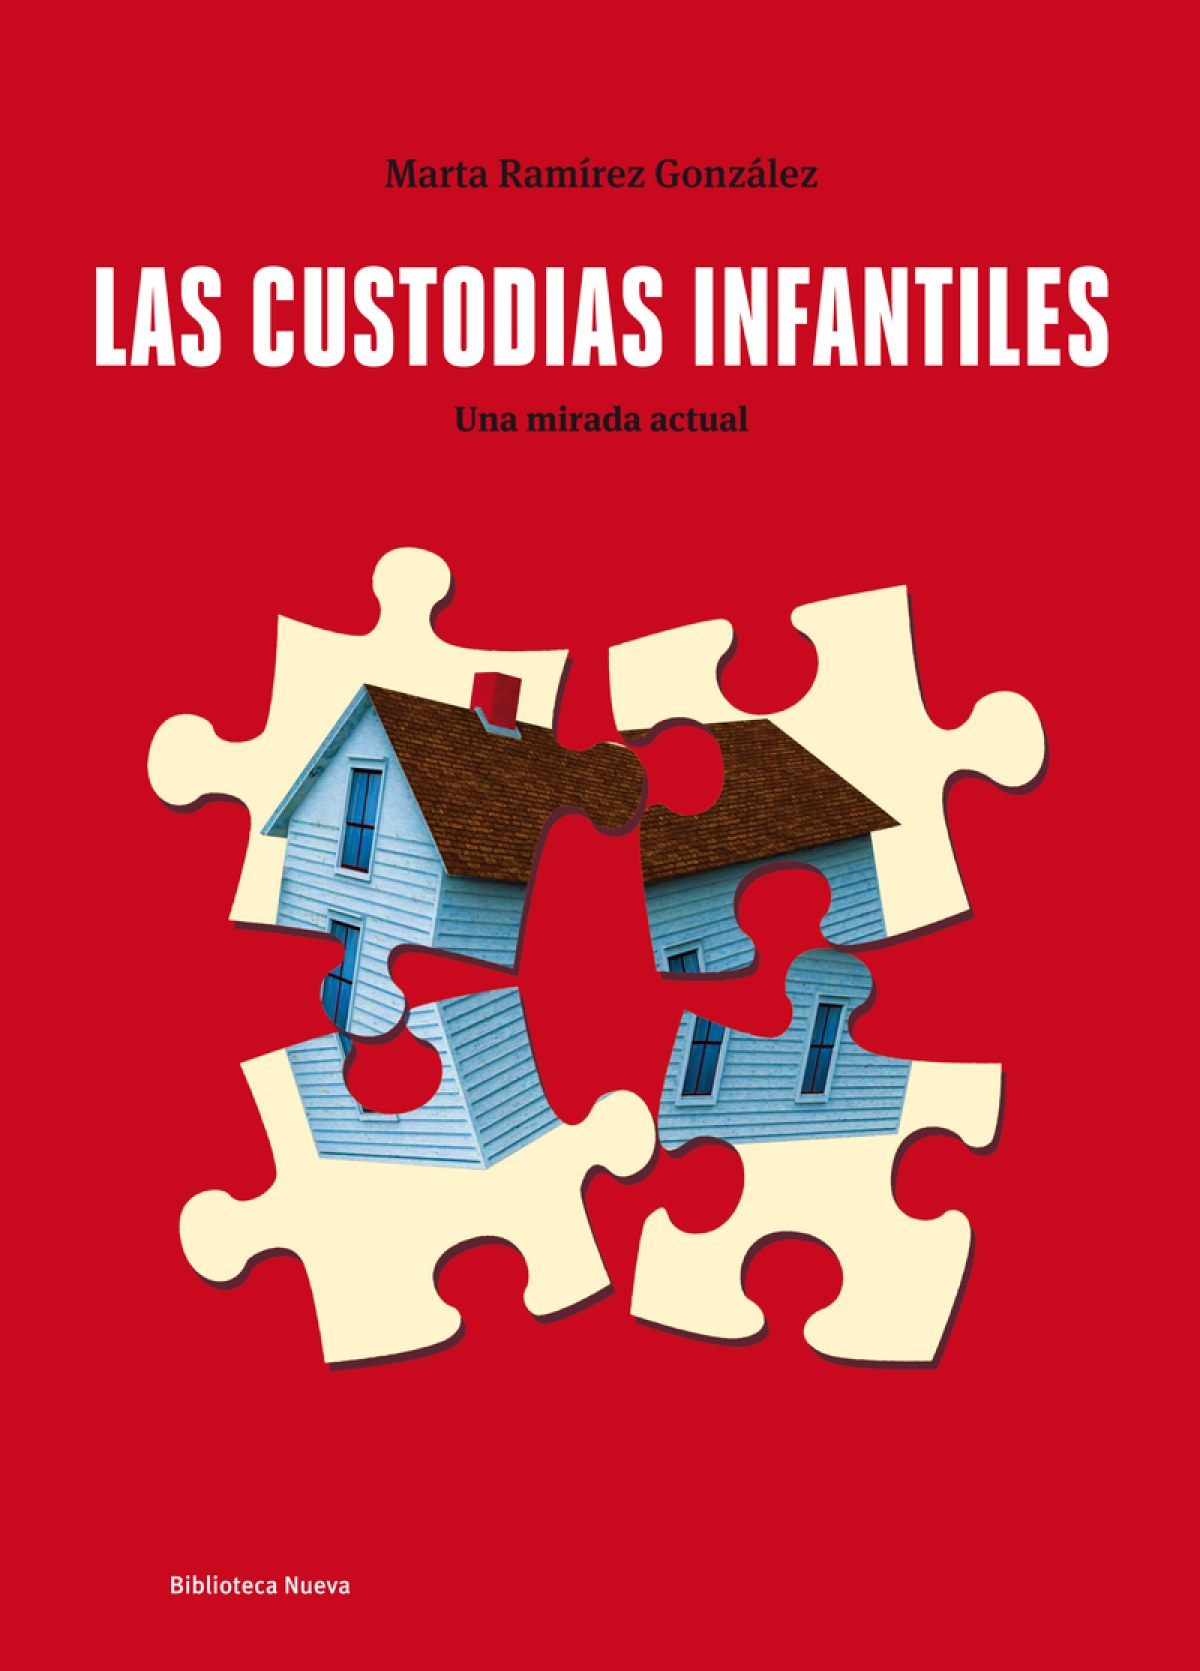 Custodias infantiles,las una mirada actual - Ramirez Gonzalez,Marta